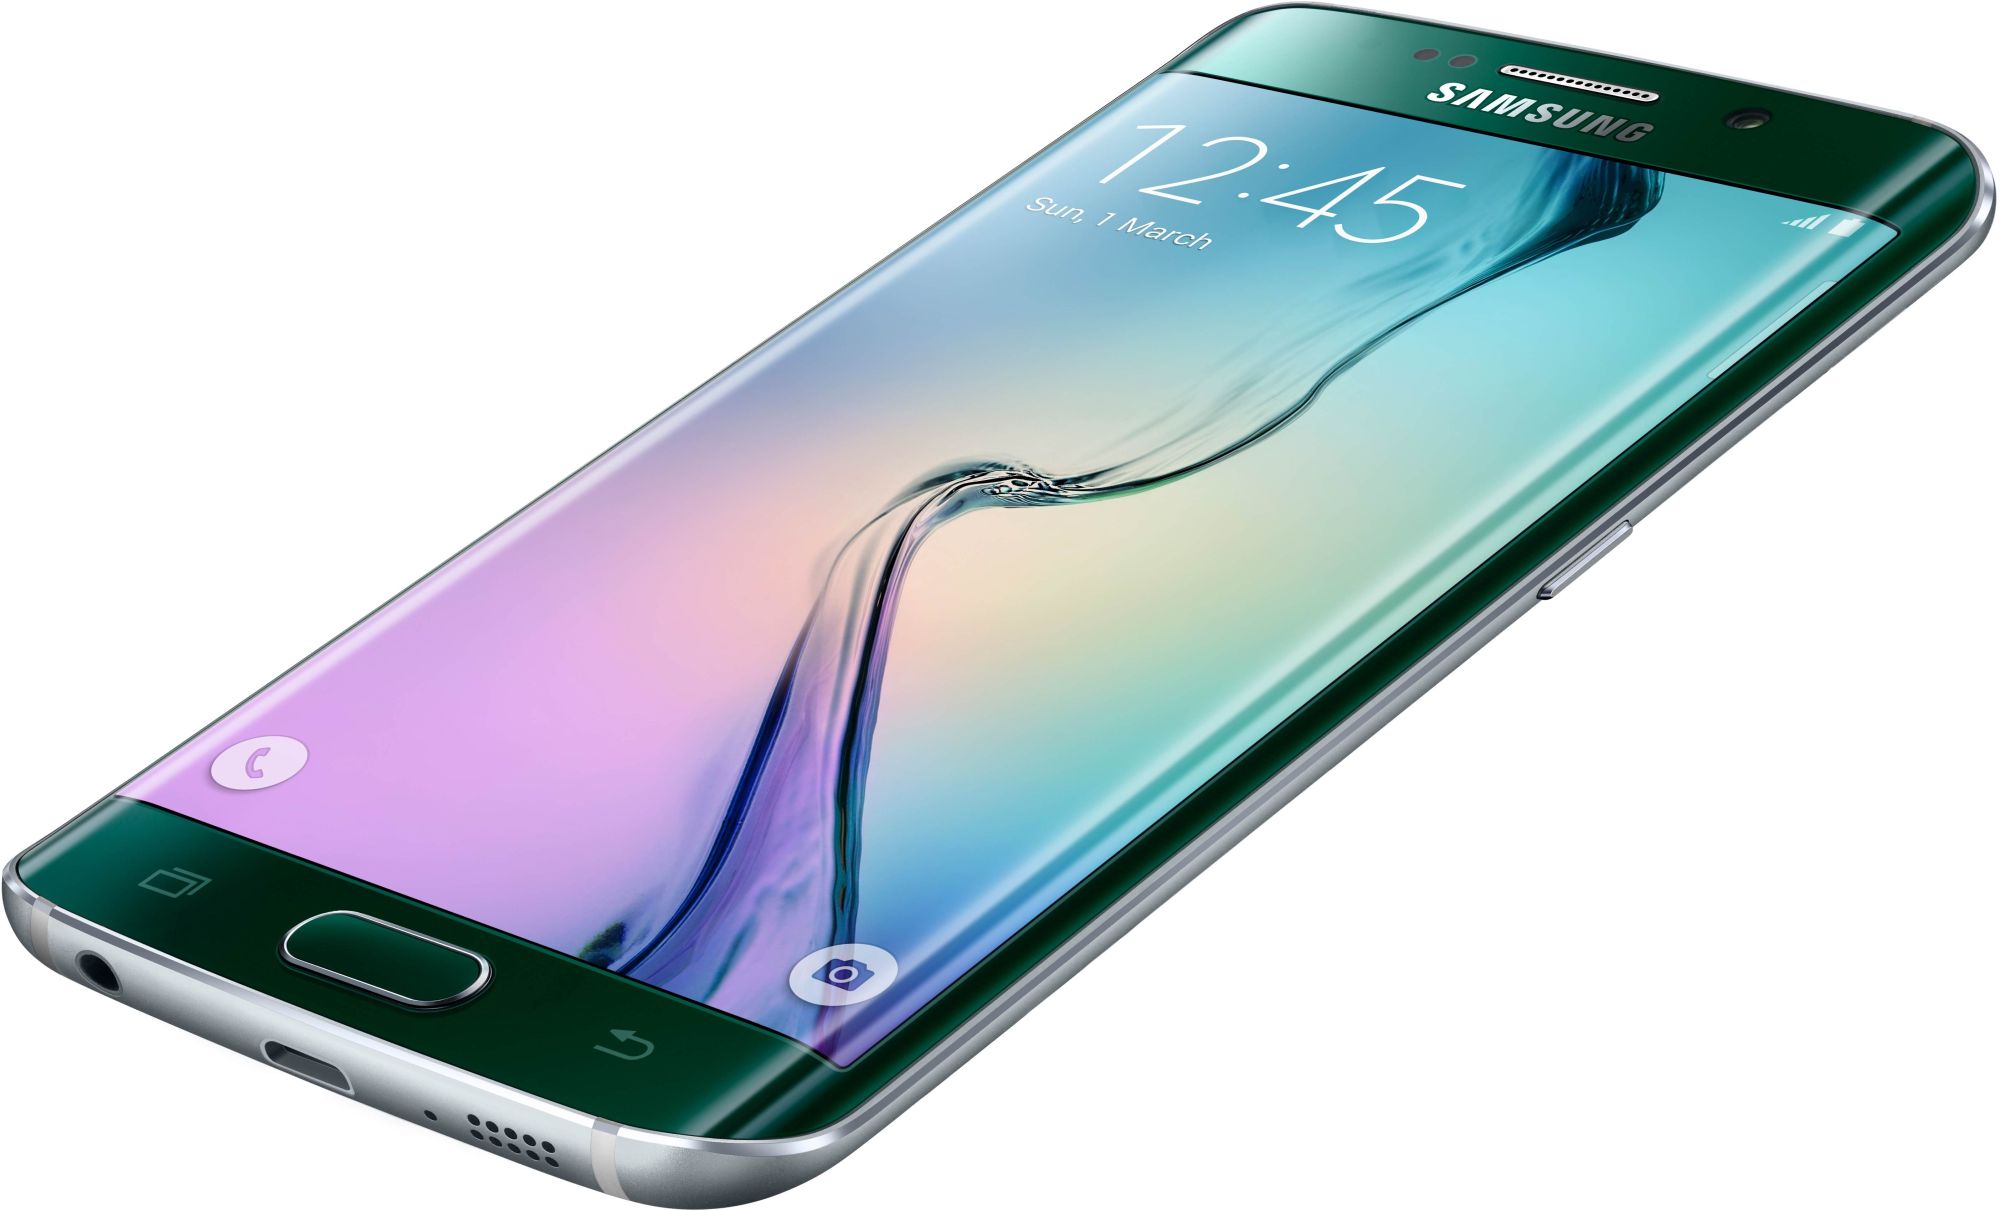 Samsung Galaxy S6 Характеристики